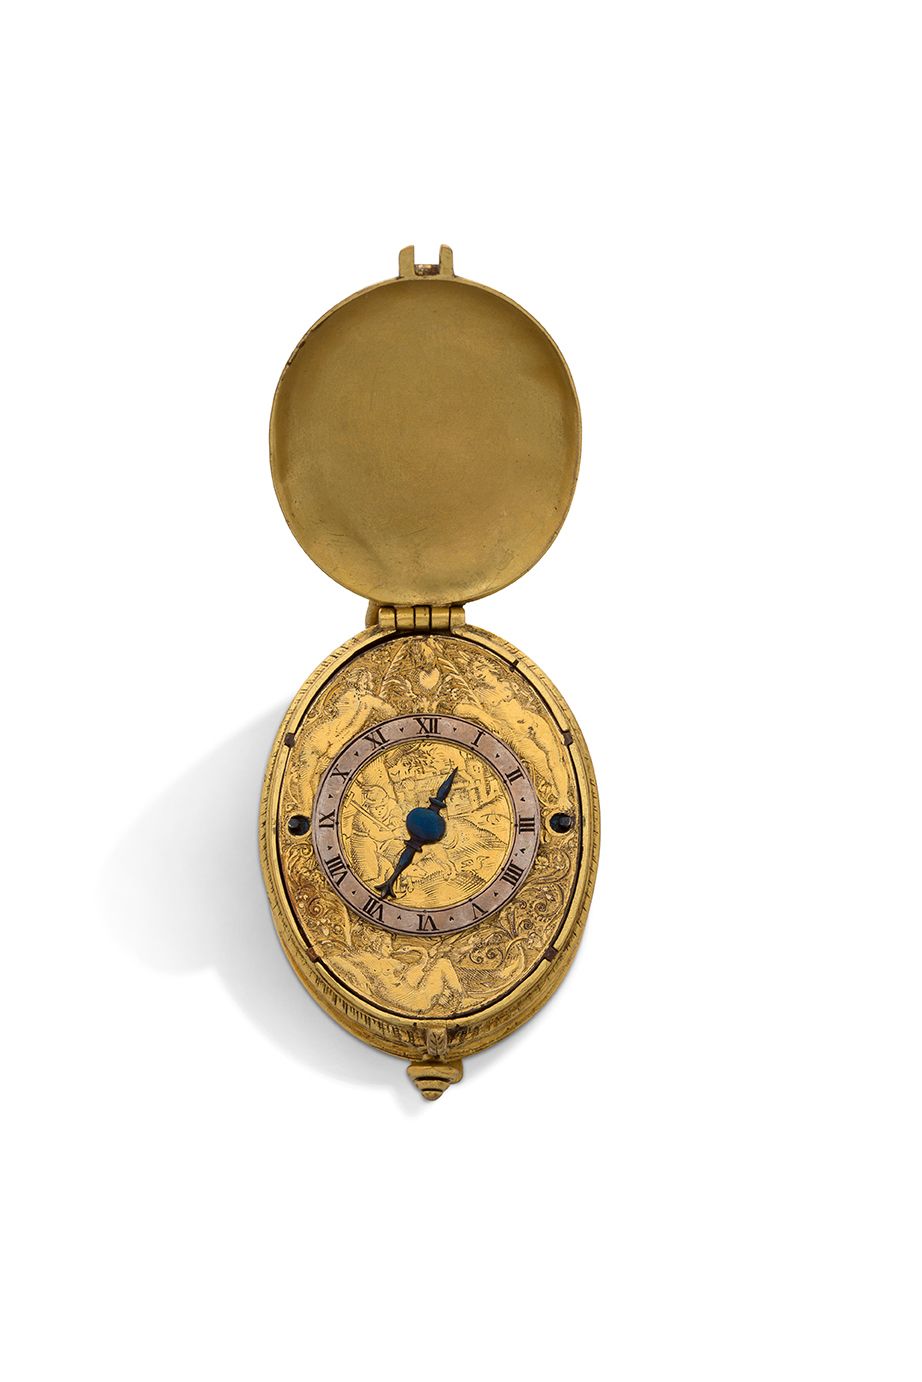 J CROYMARIE, au Puy 
Reloj "Puritan" de metal dorado con una sola aguja



Caja &hellip;